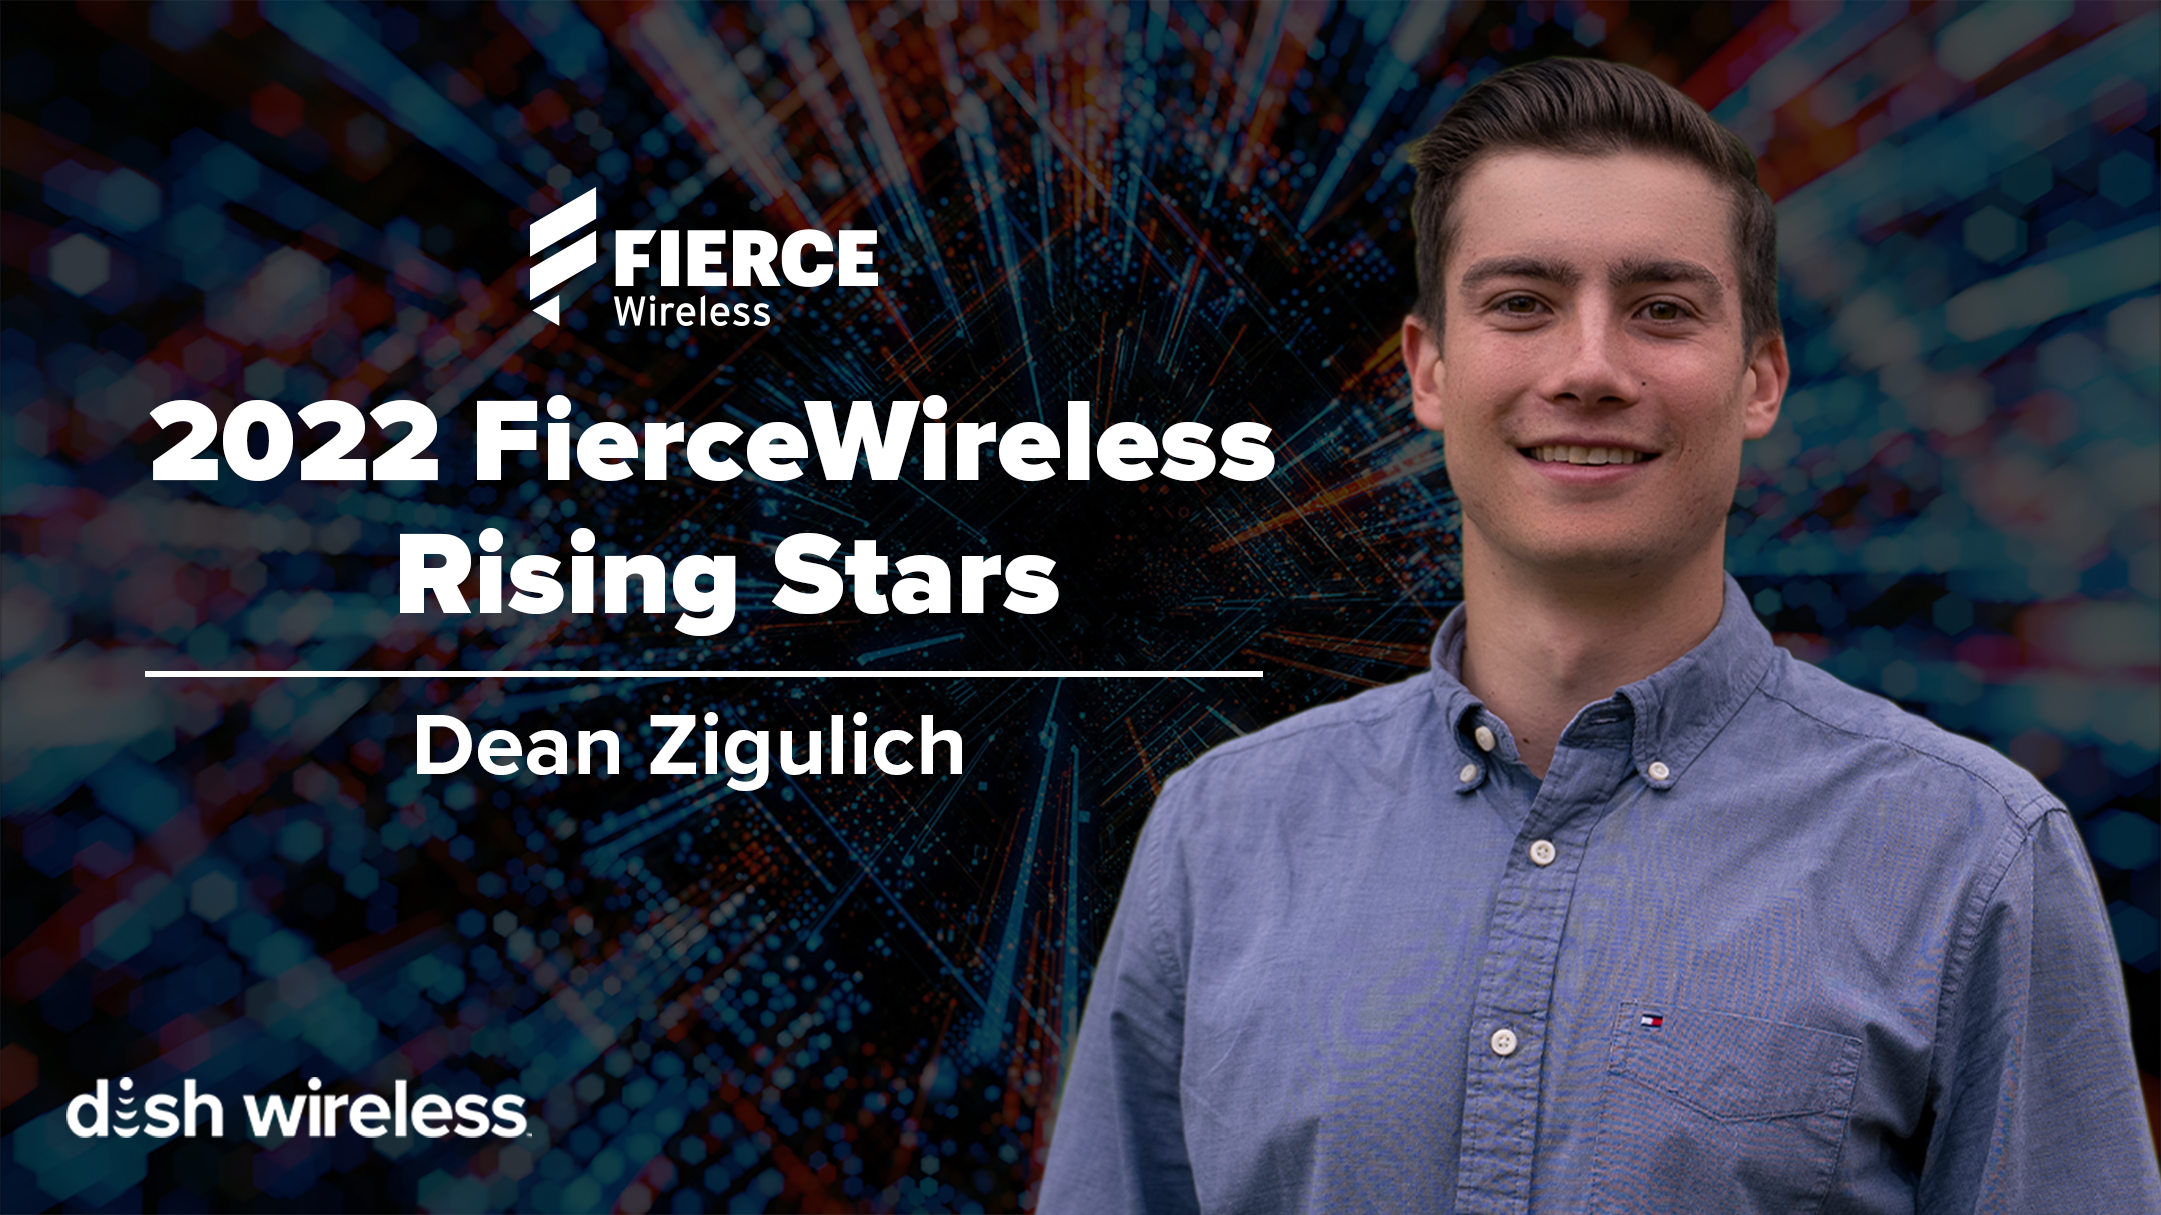 FierceWireless 2022 rising stars awards DISH's Dean Zigulich